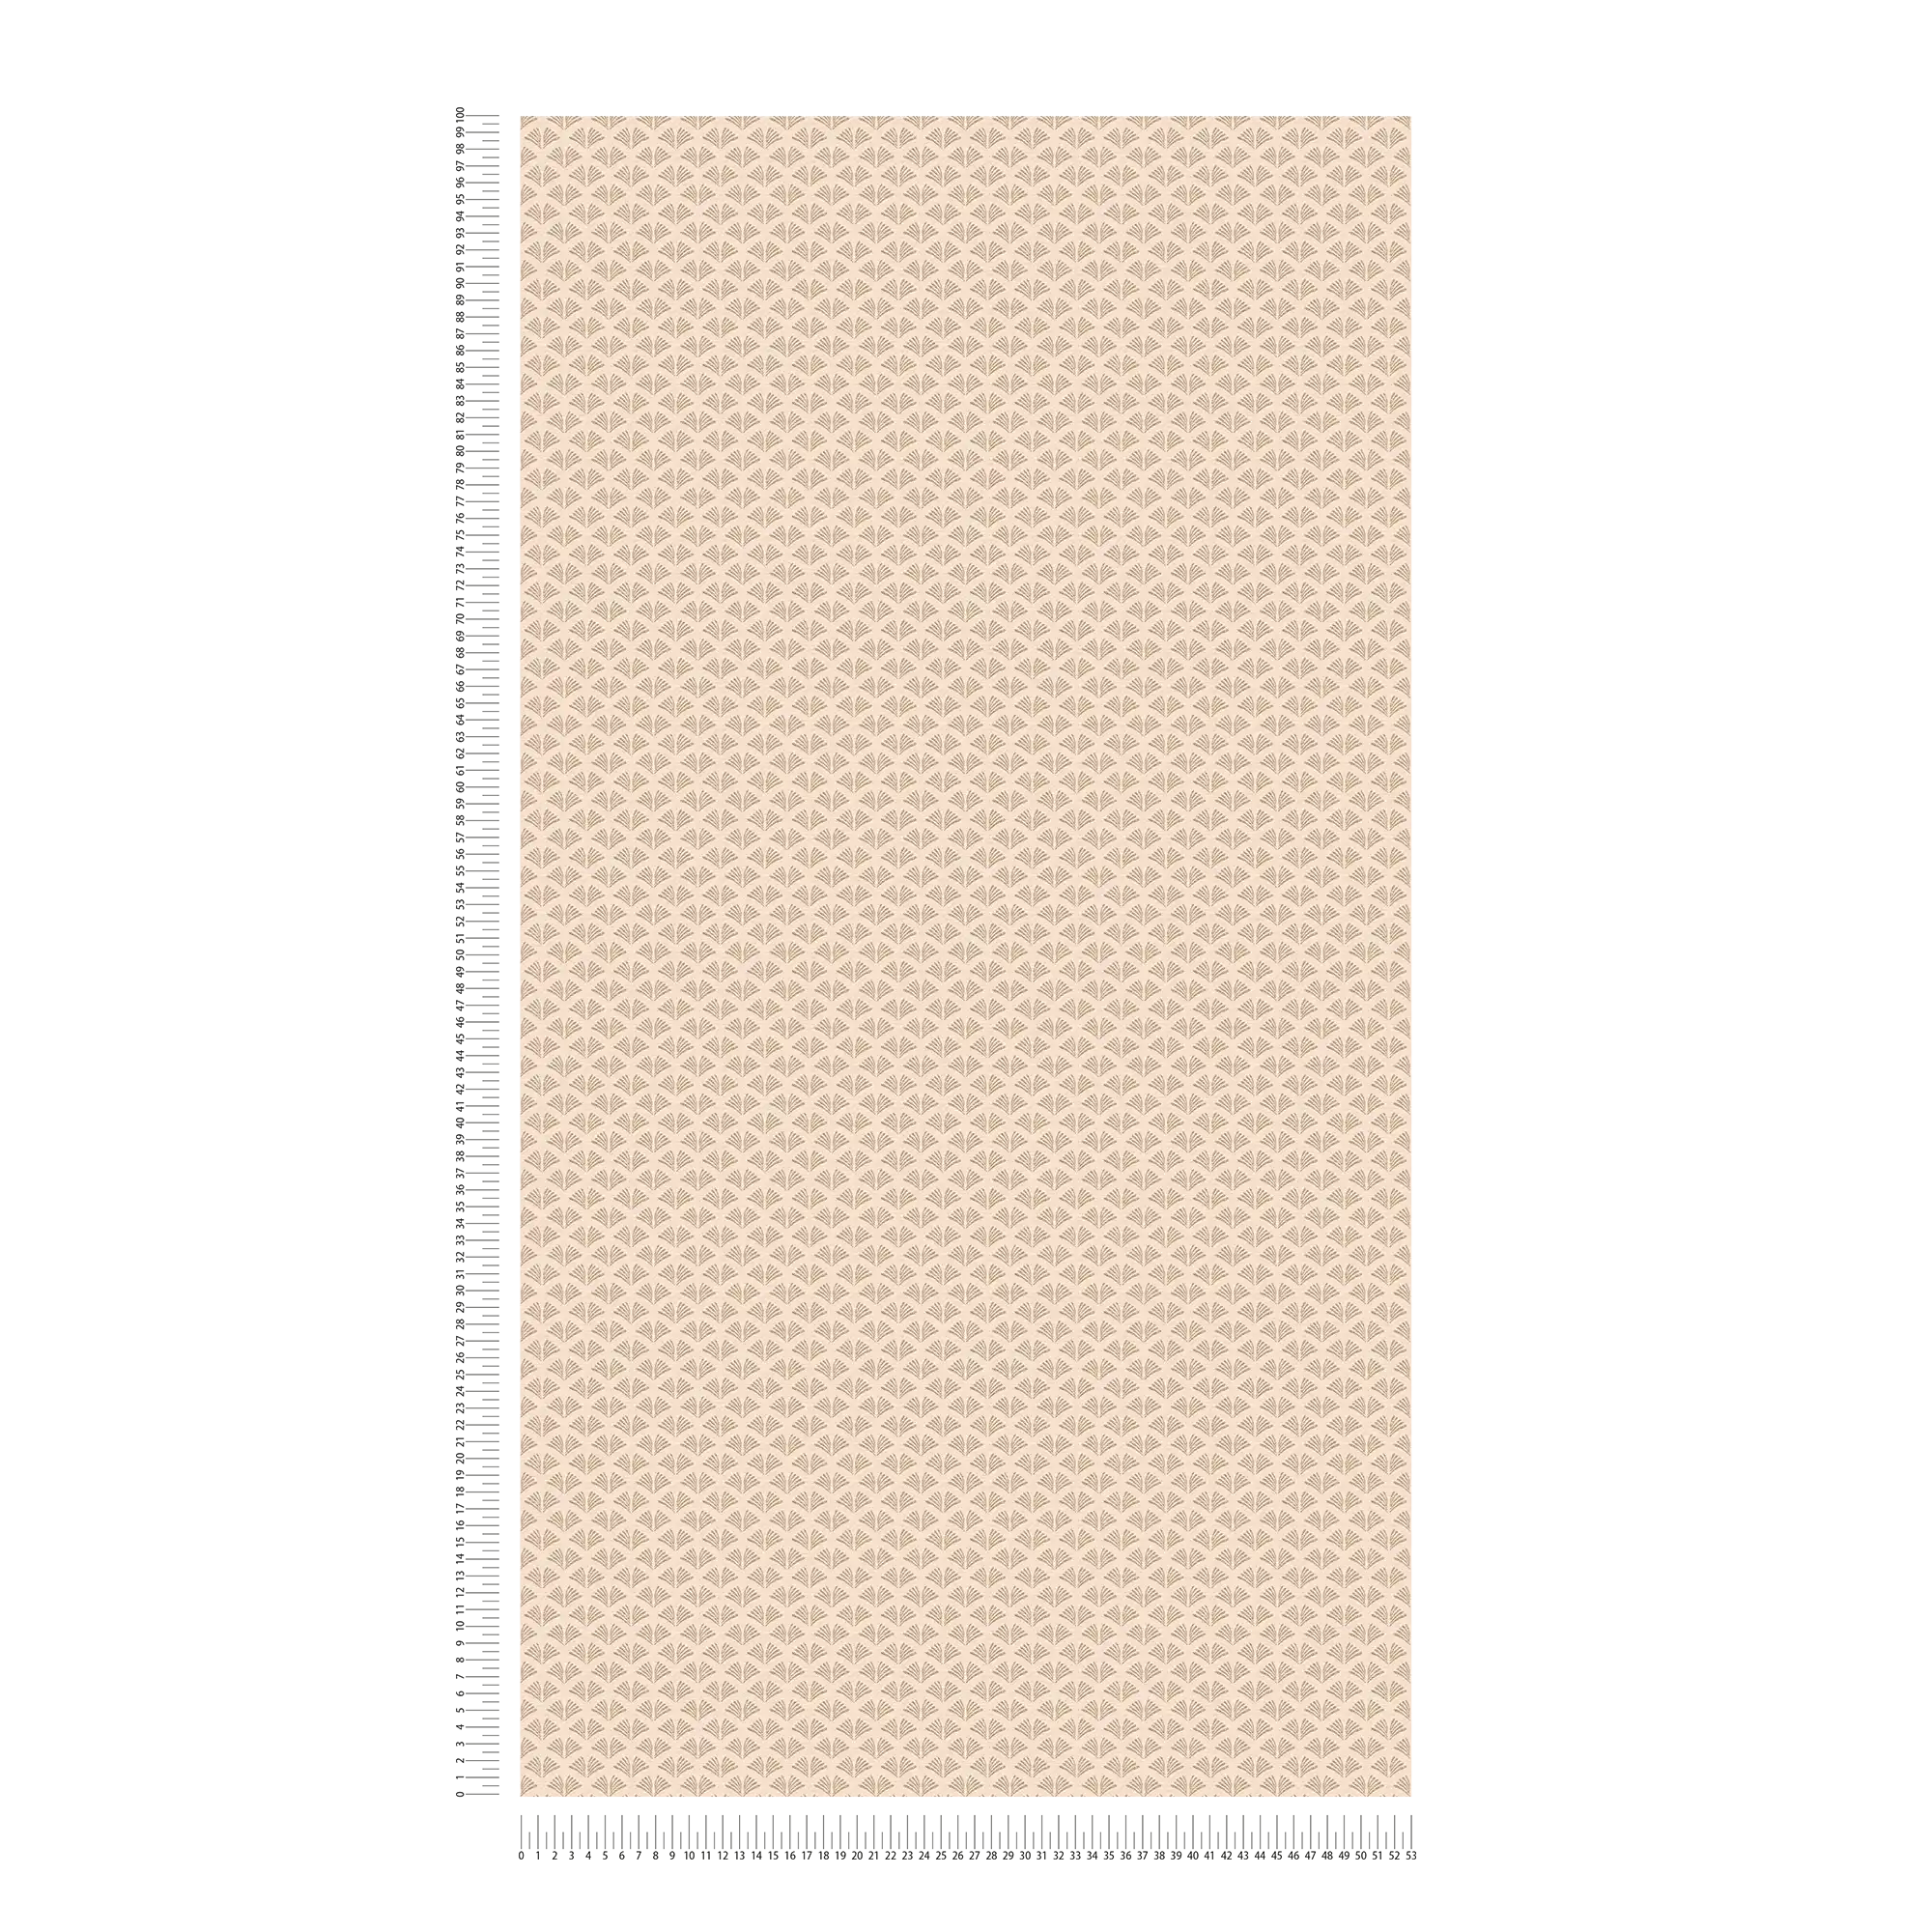             Pattern wallpaper with metallic design & texture effect - cream, metallic, pink
        